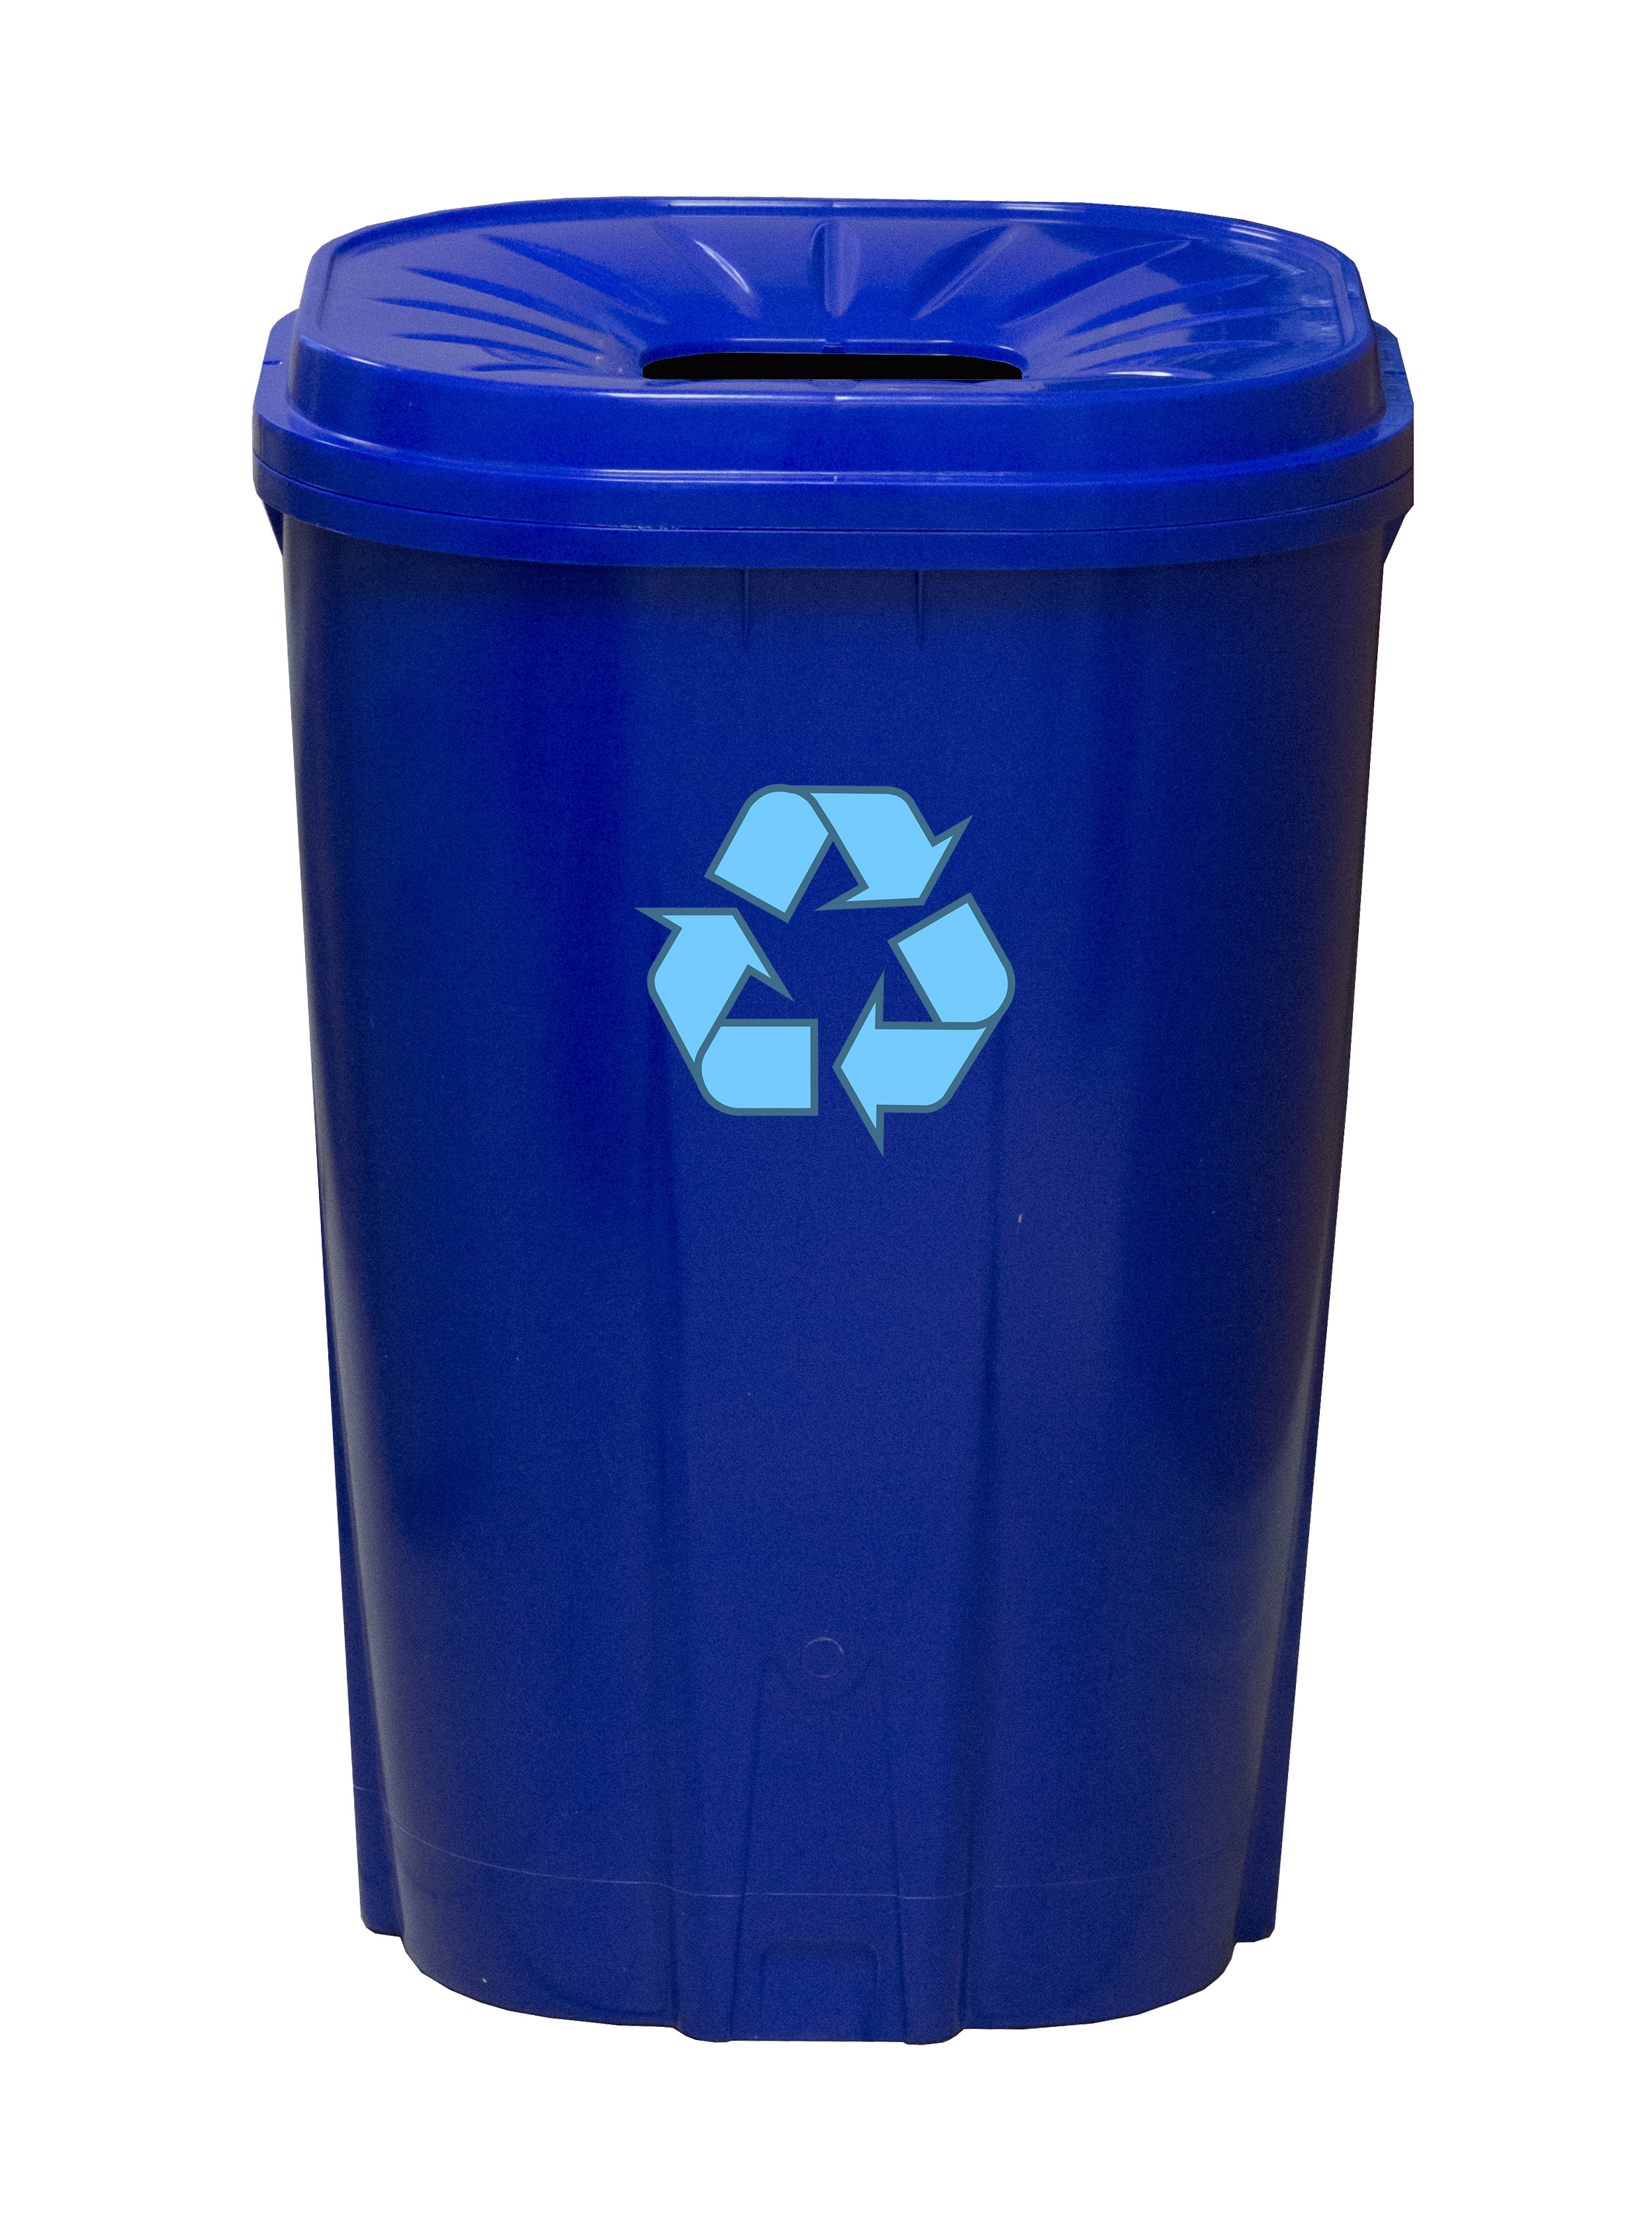 Enviro Recycler | :: Welcome to Enviro World ::